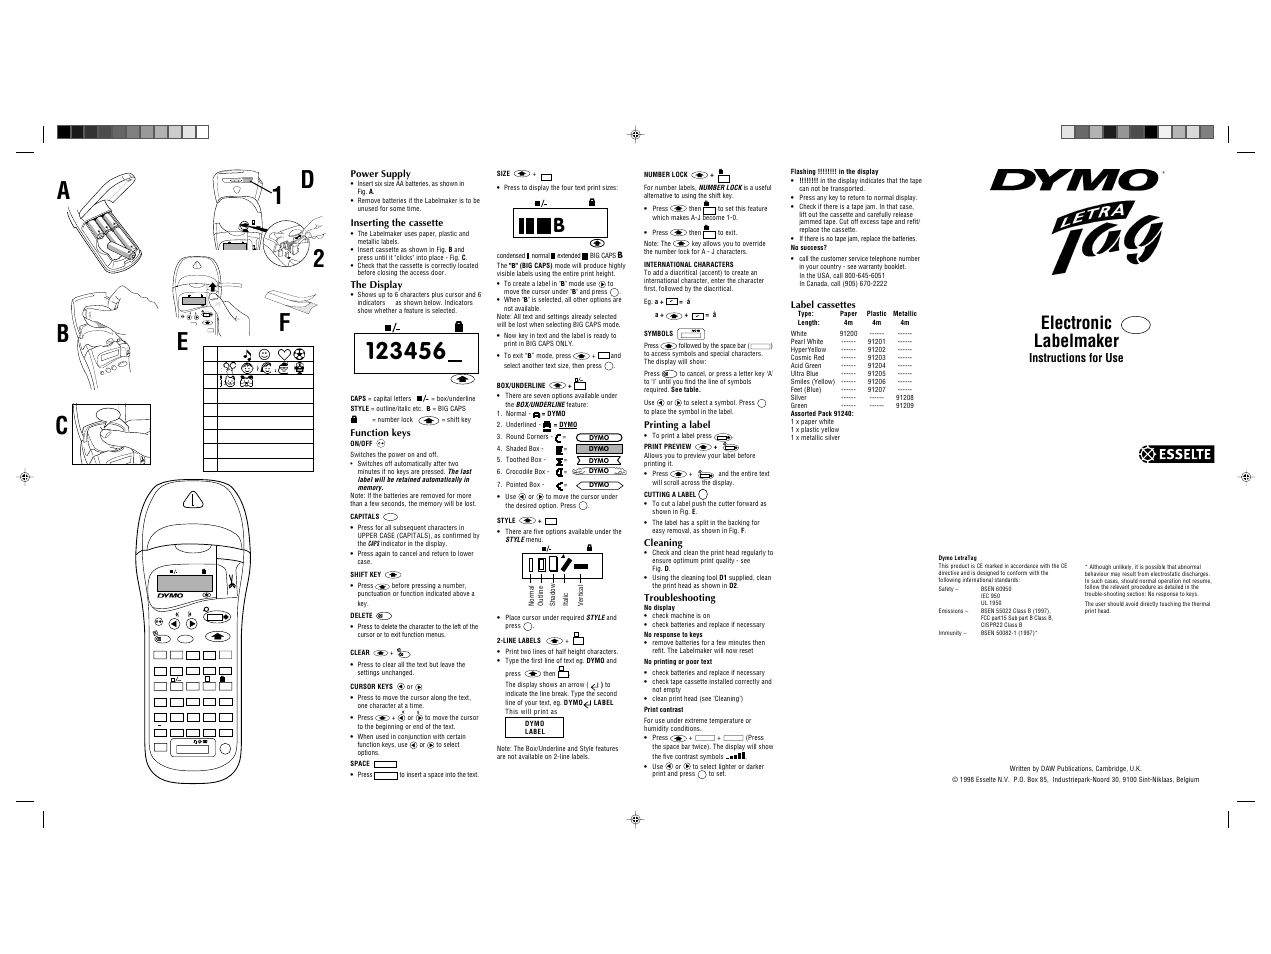 Dymo LetraTag 2000 User Manual | 1 page | Original mode